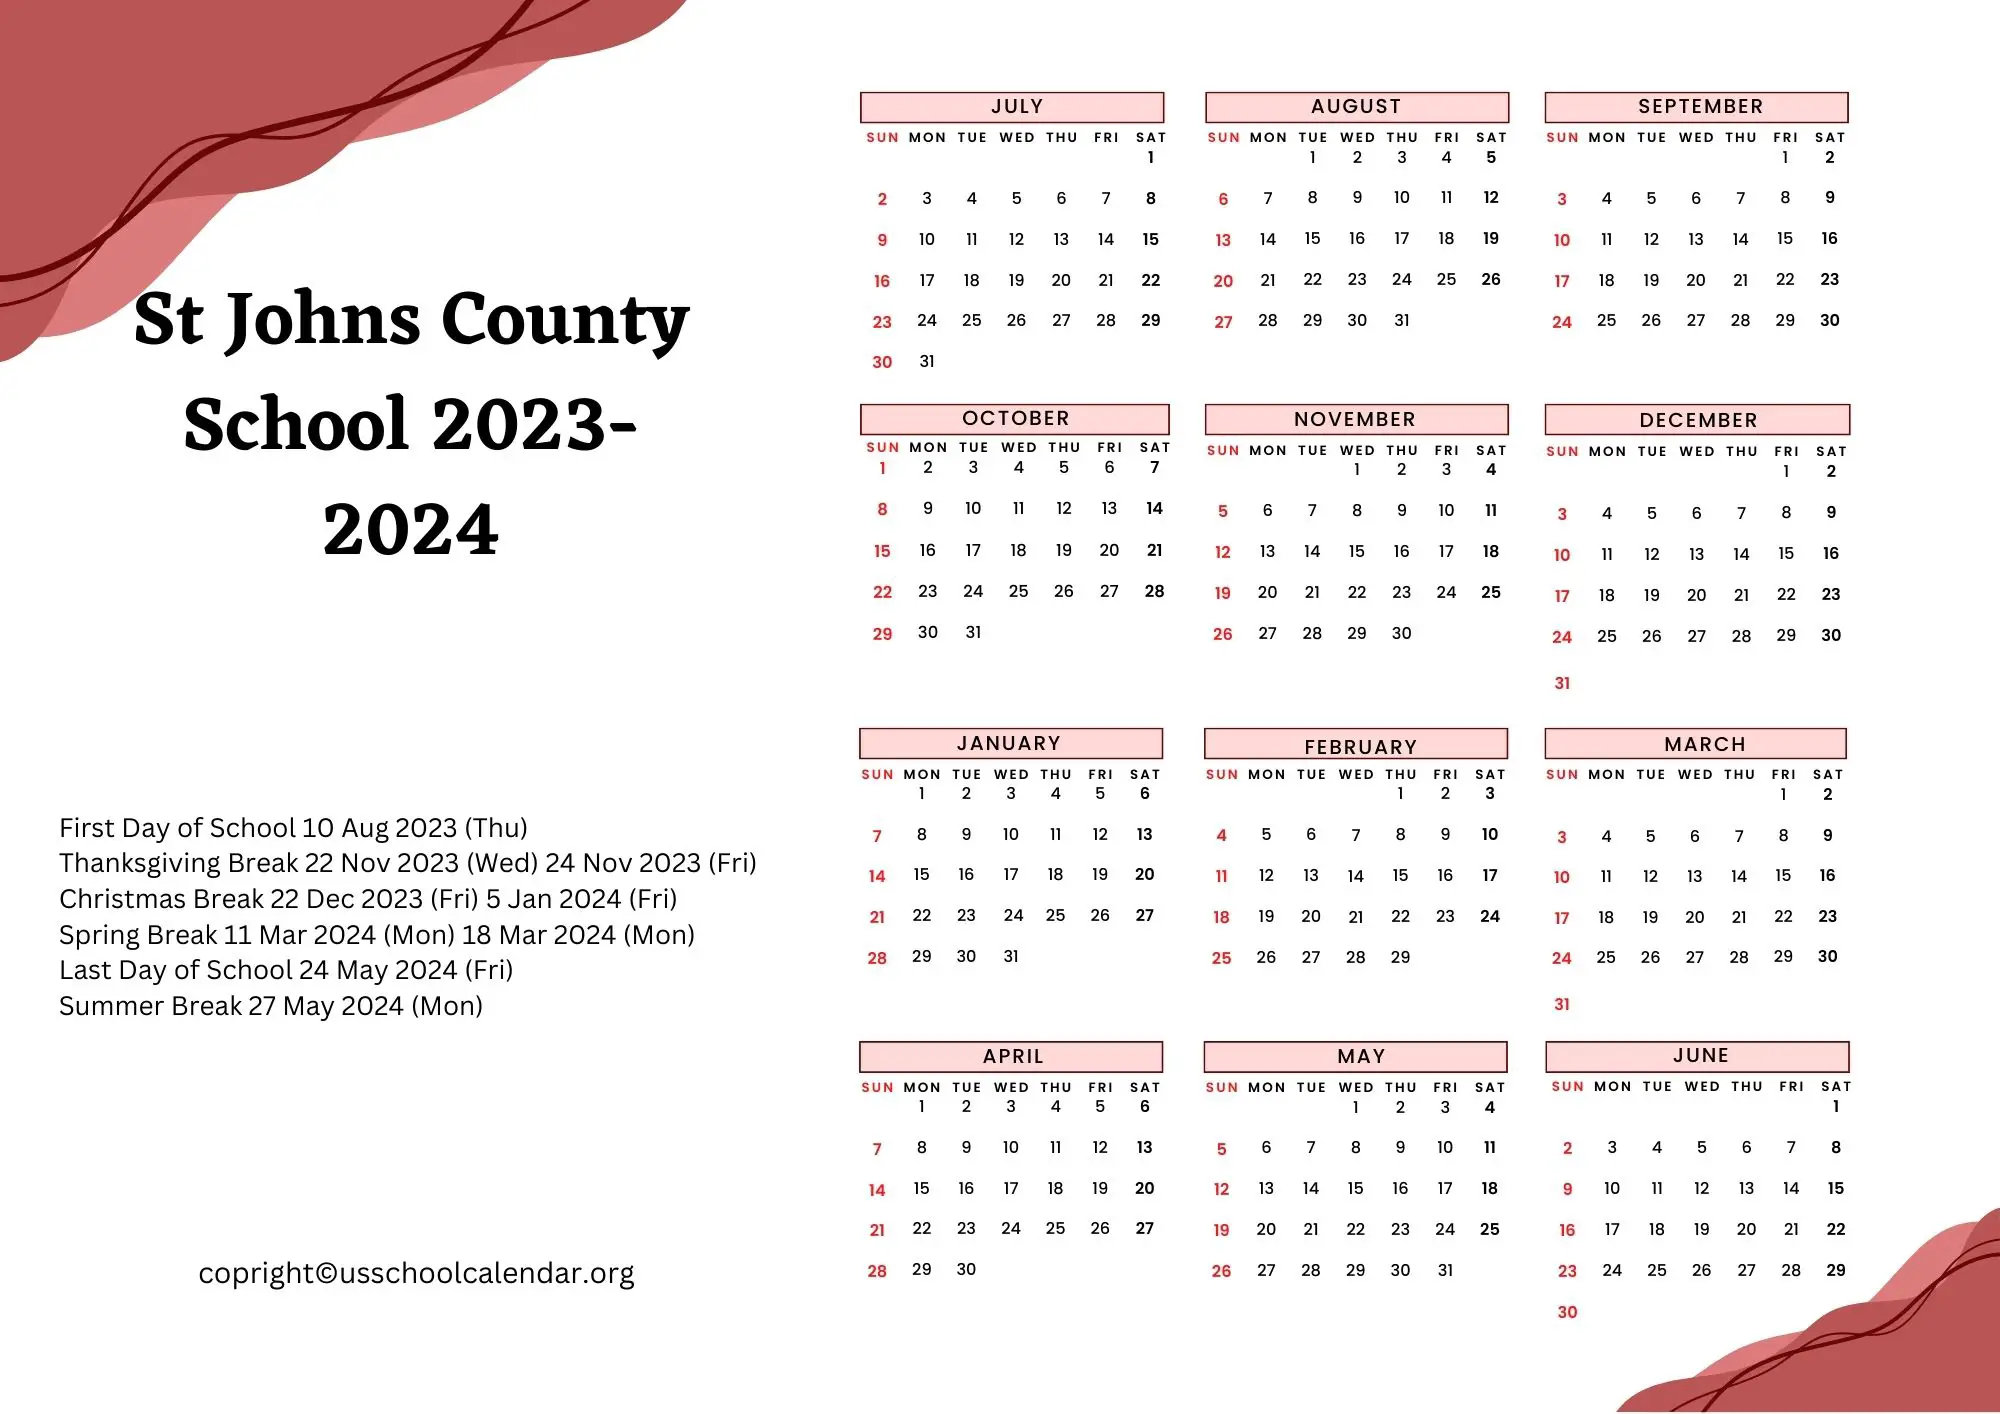 St Johns County School Calendar with Holidays 20232024